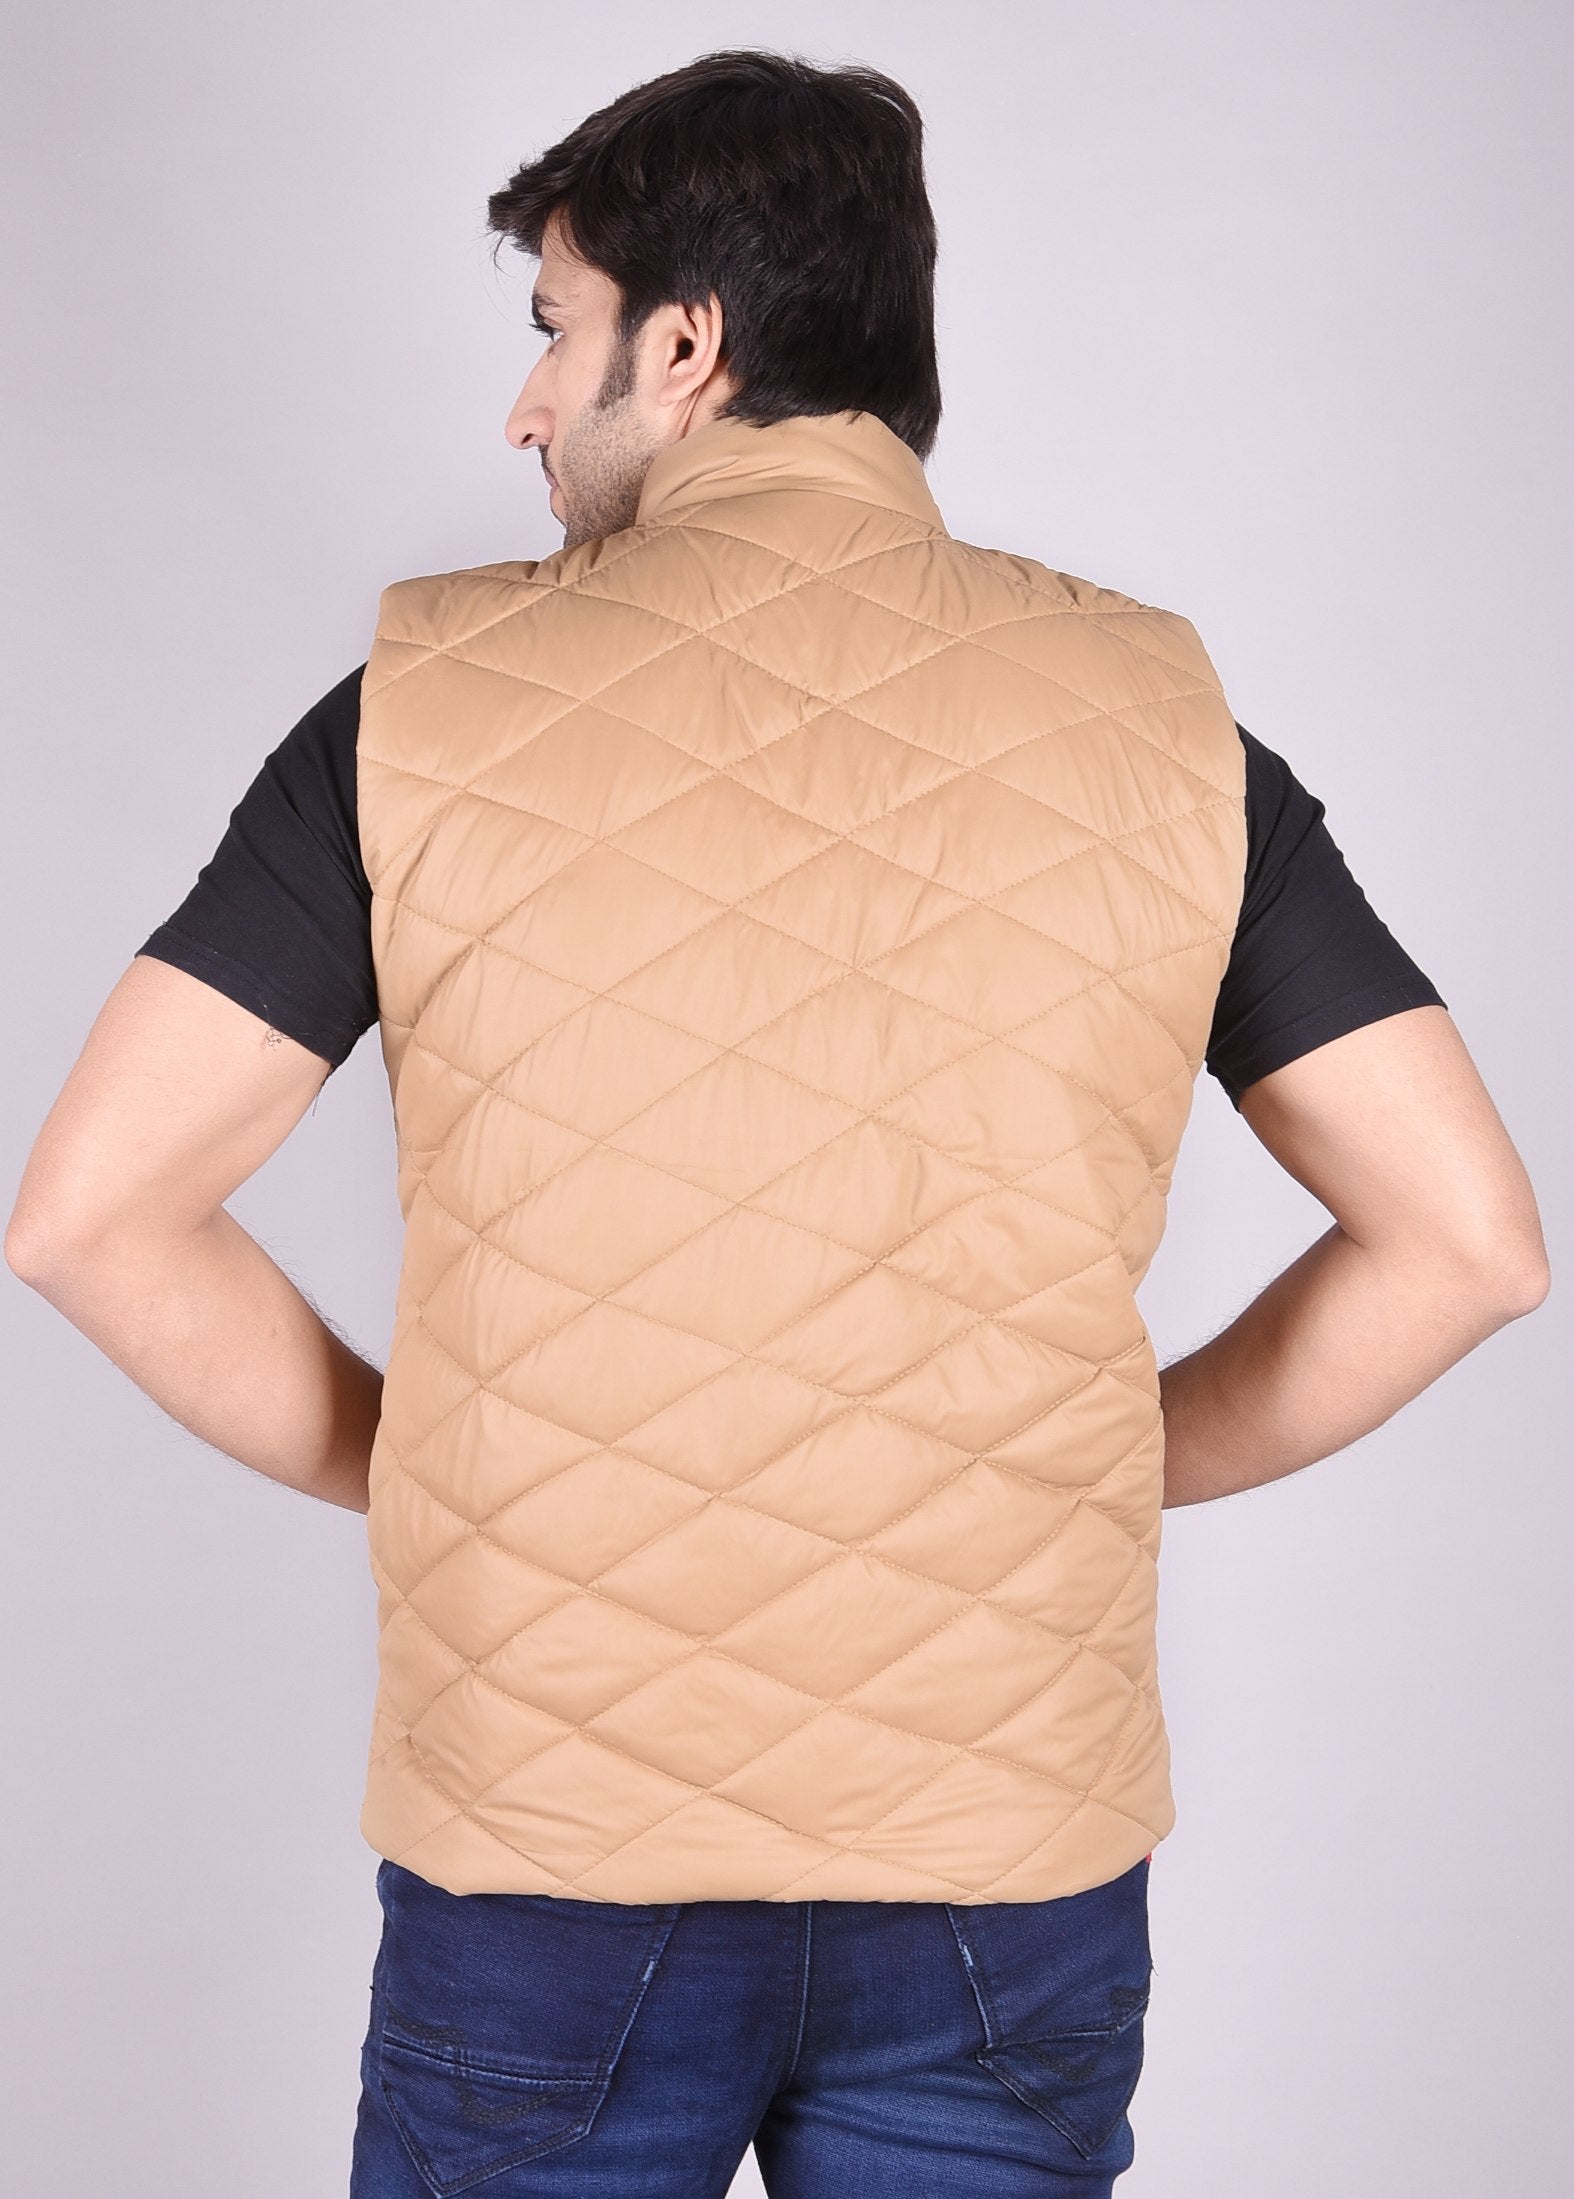 47% OFF on KRITIKA WORLD Full Sleeve Solid Men Jacket on Flipkart |  PaisaWapas.com